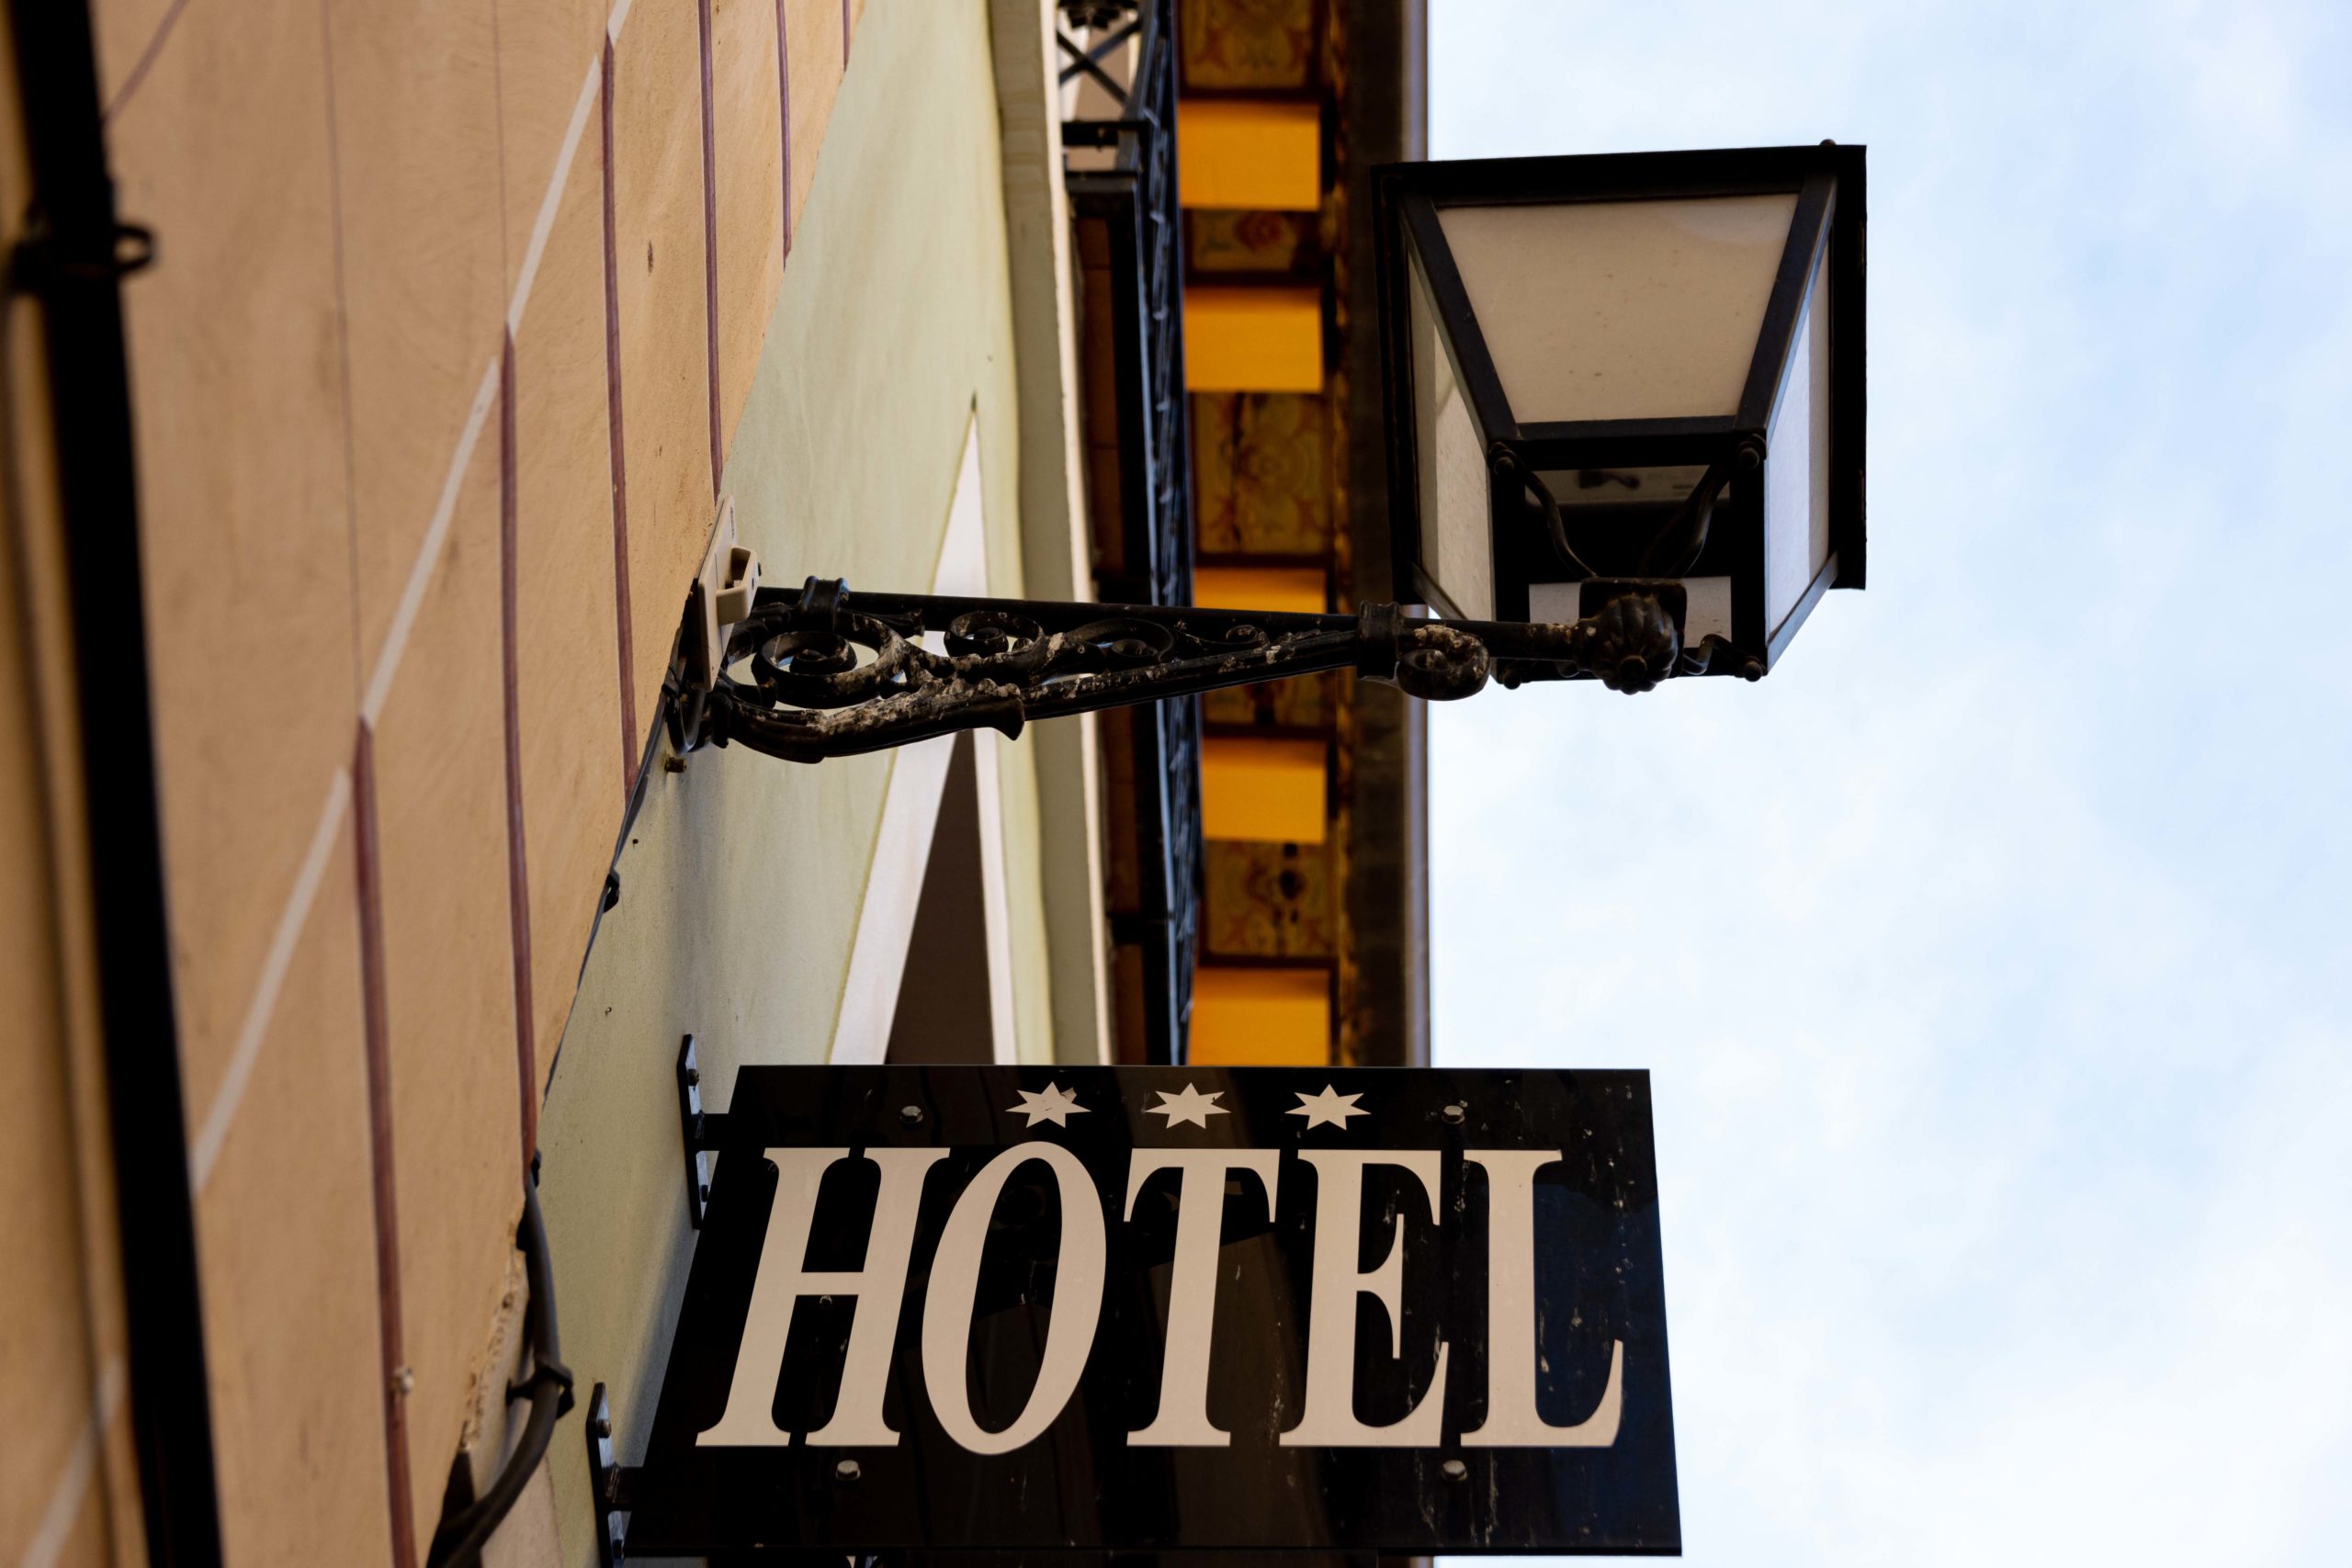 Hotel sign (by antoniohugophoto via Envato Elements)